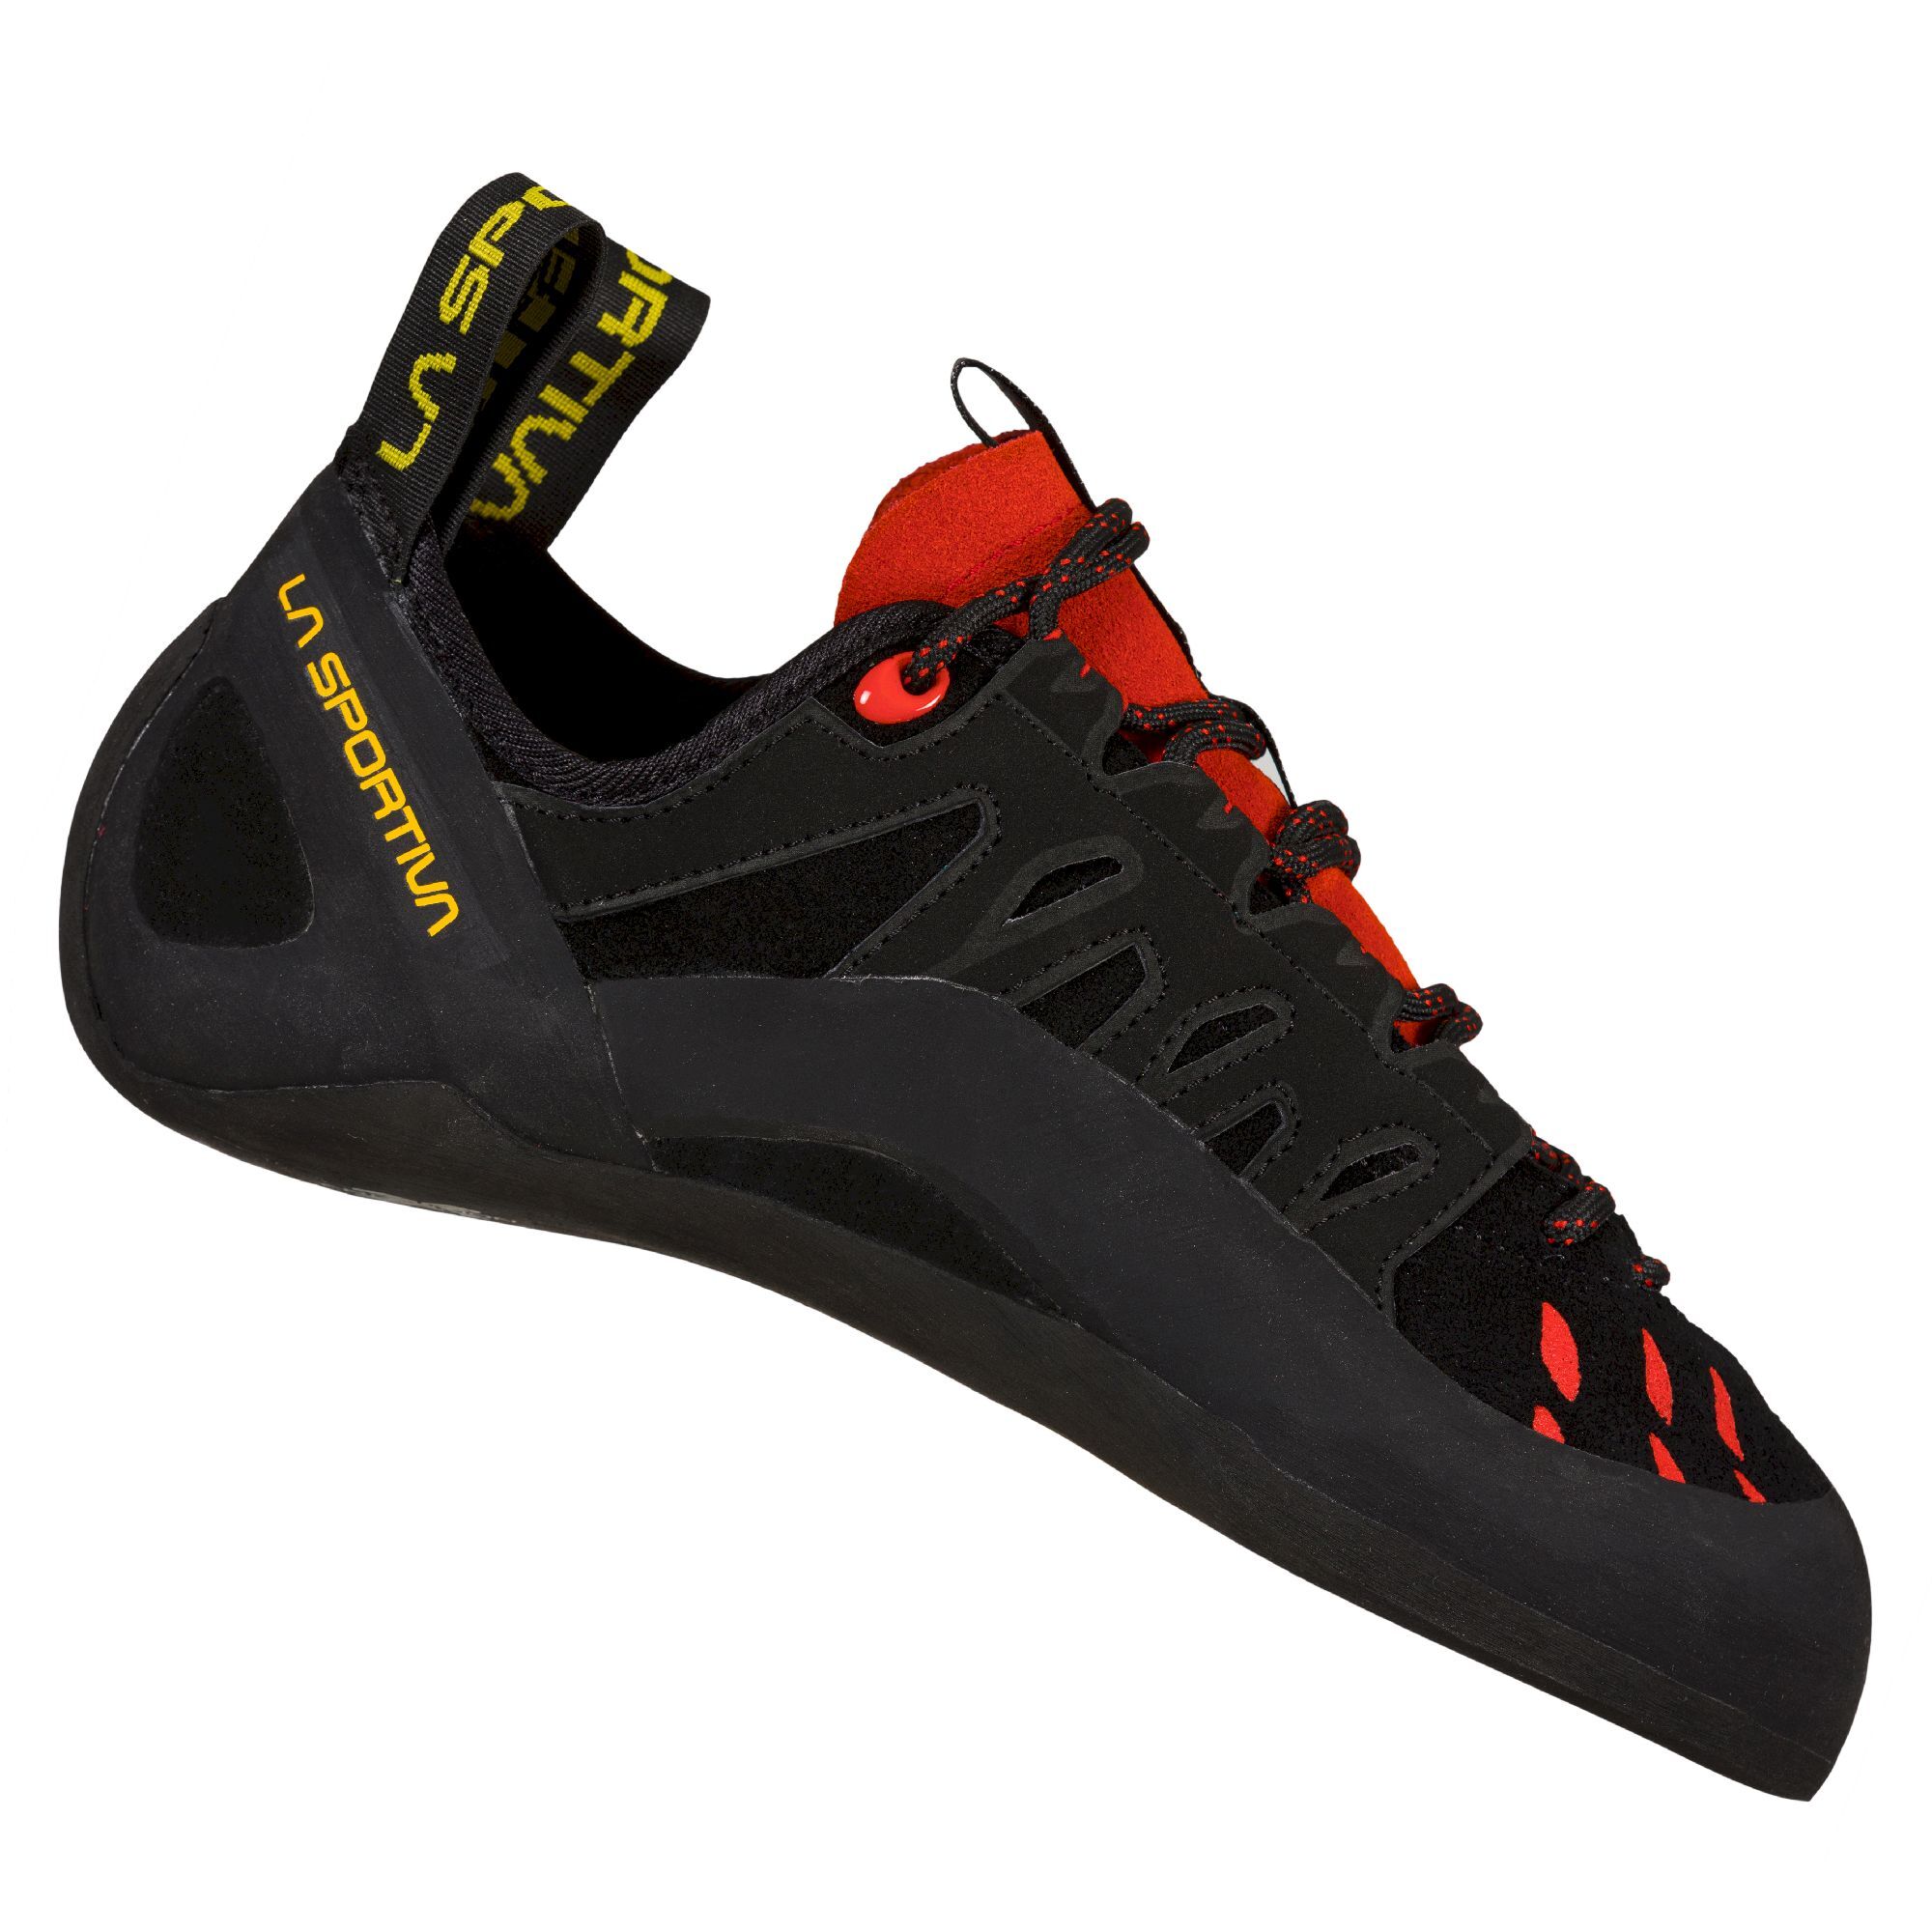 La Sportiva Tarantulace - Climbing shoes - Men's